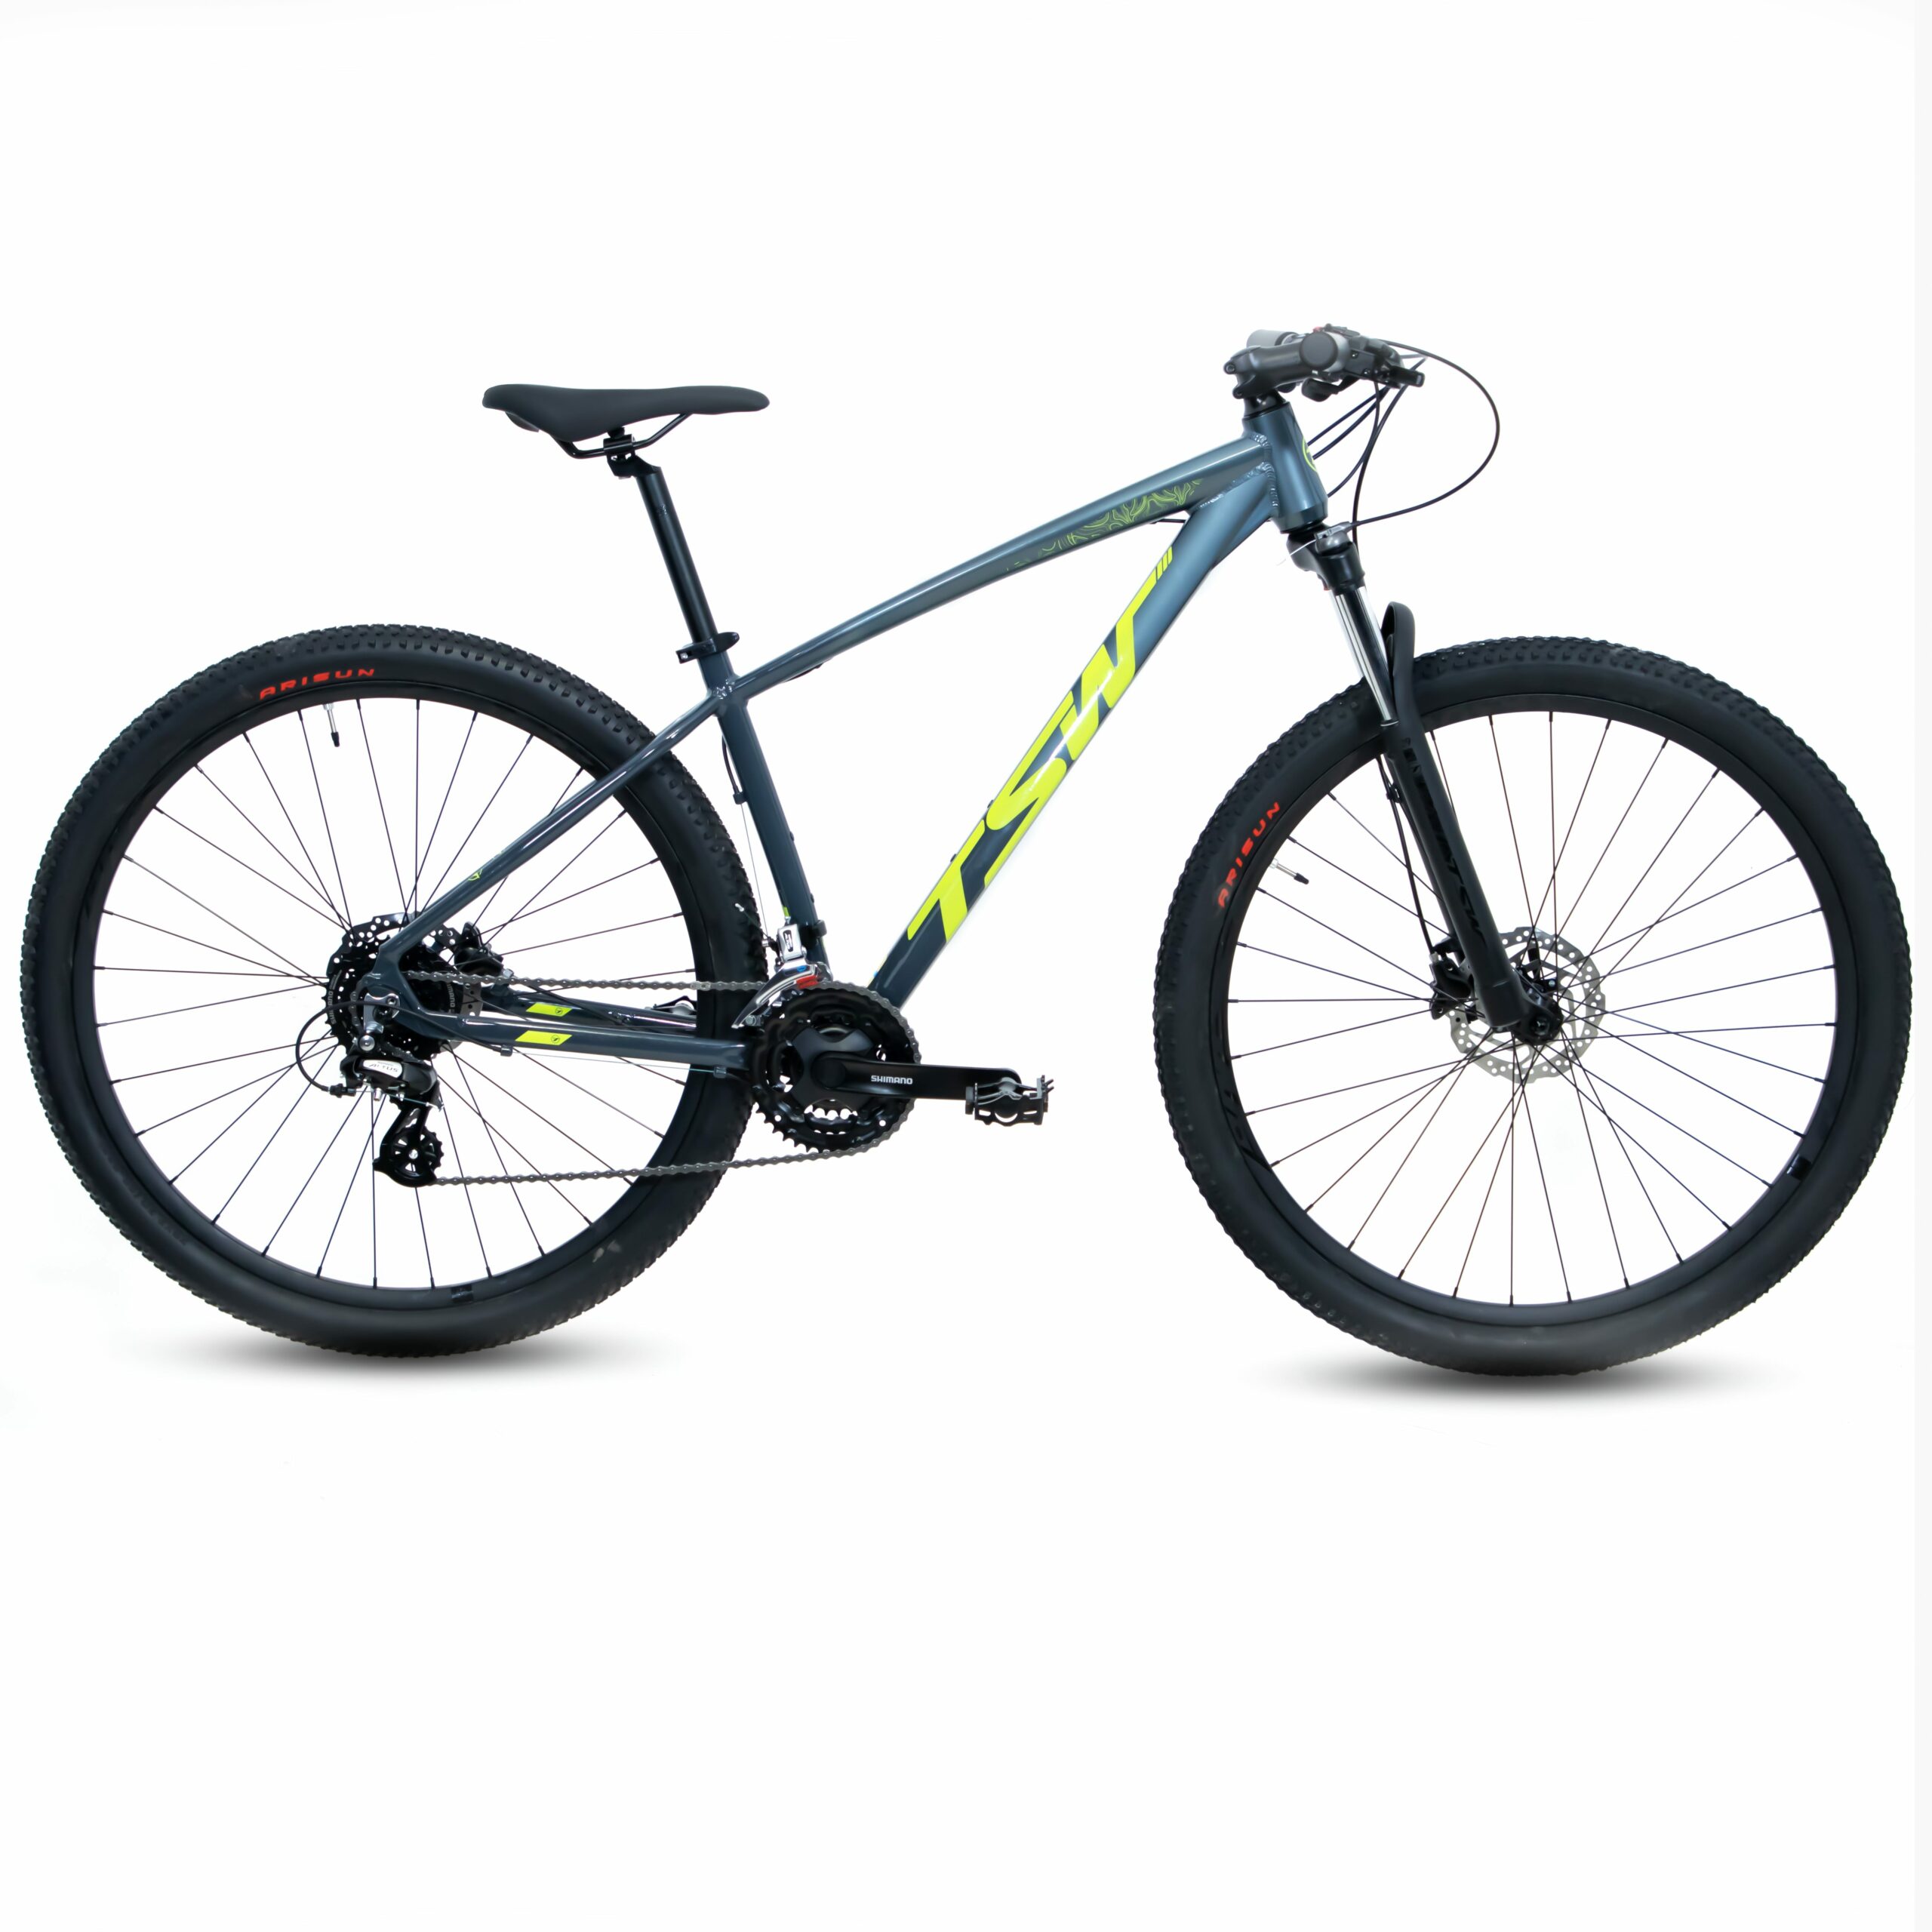 Bicicleta TSW Hunch | 2021/2022 - 15.5", Cinza/Verde